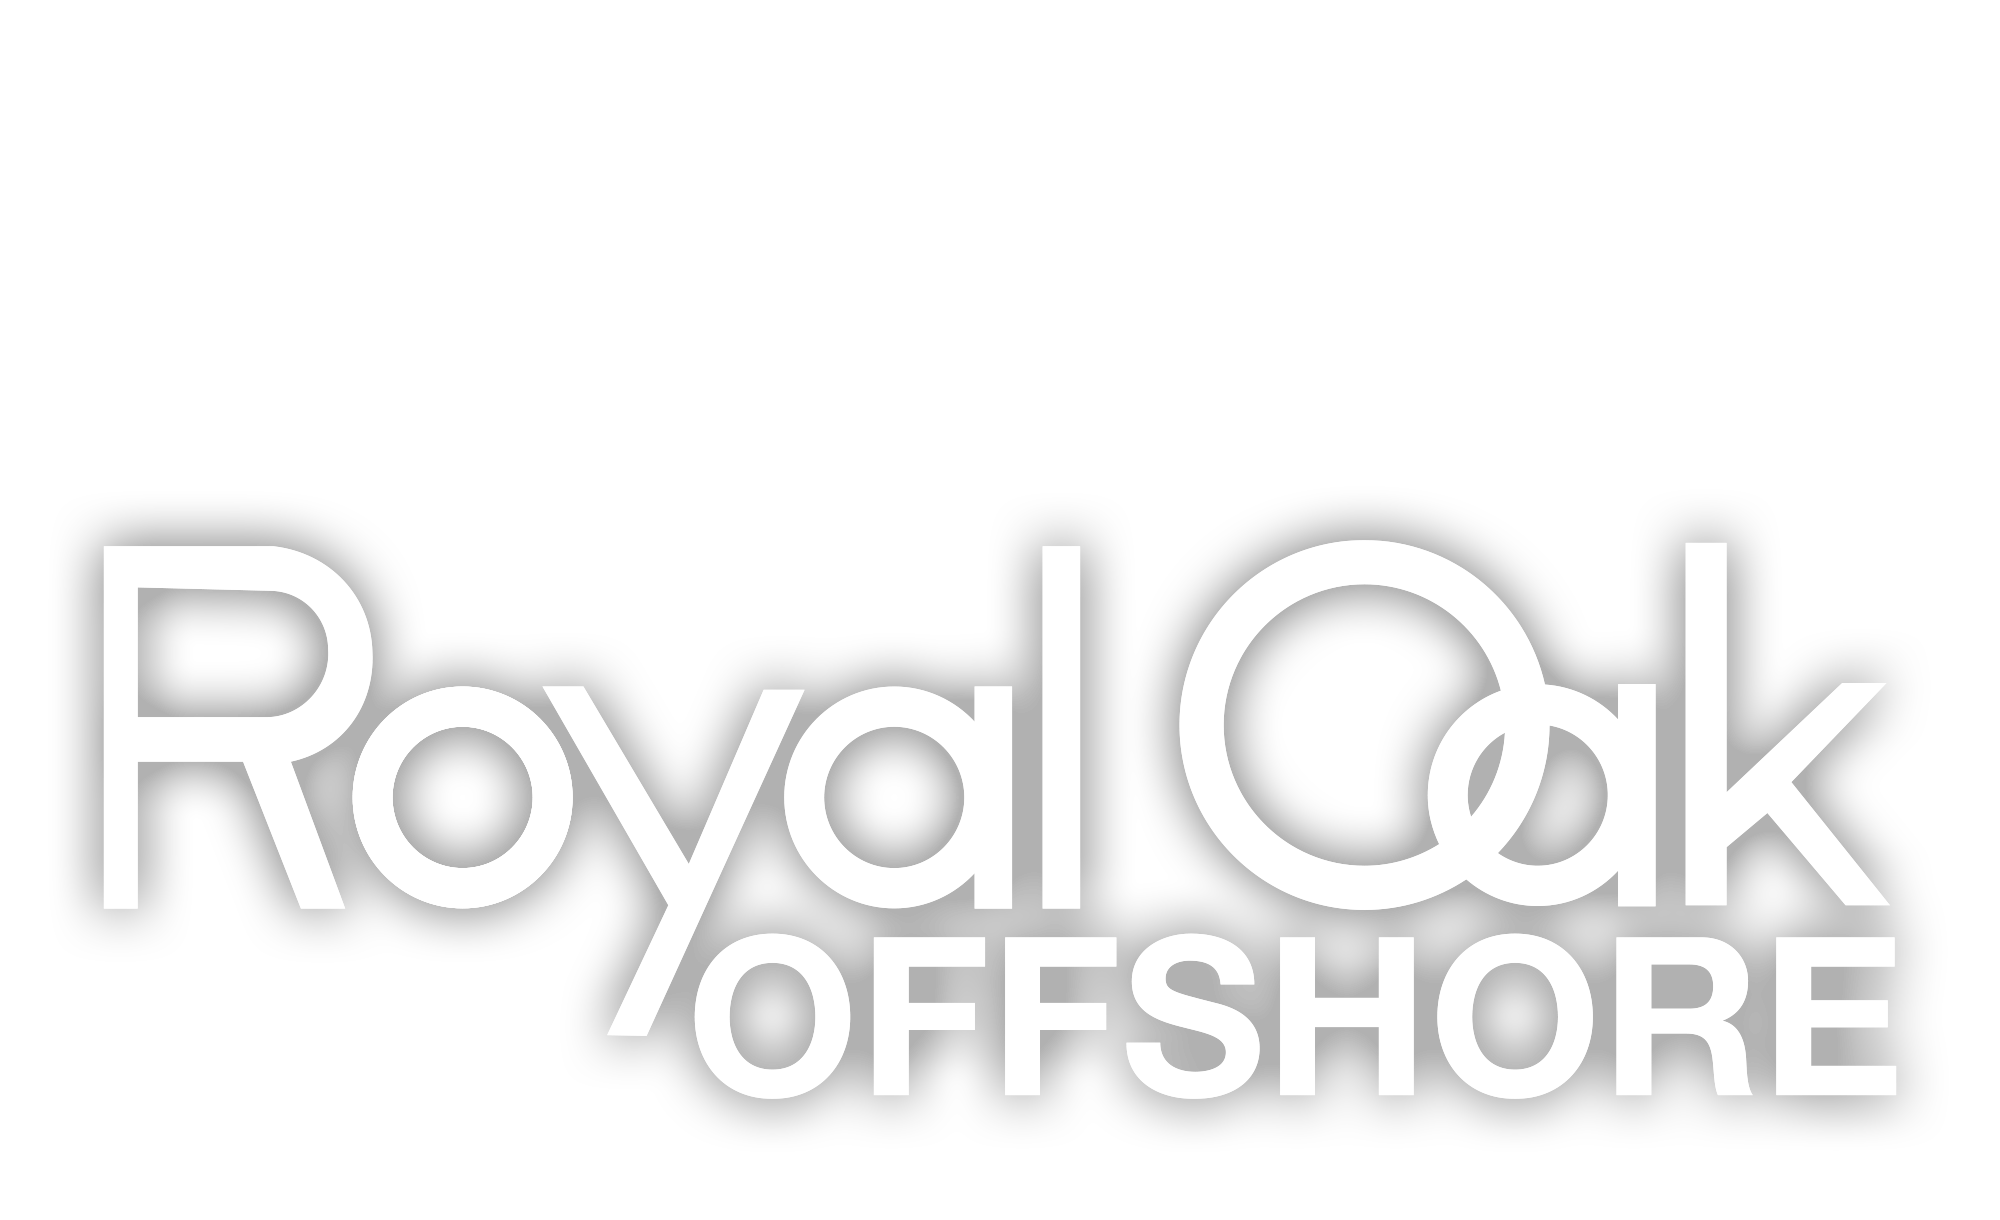 Colección Royal Oak Offshore